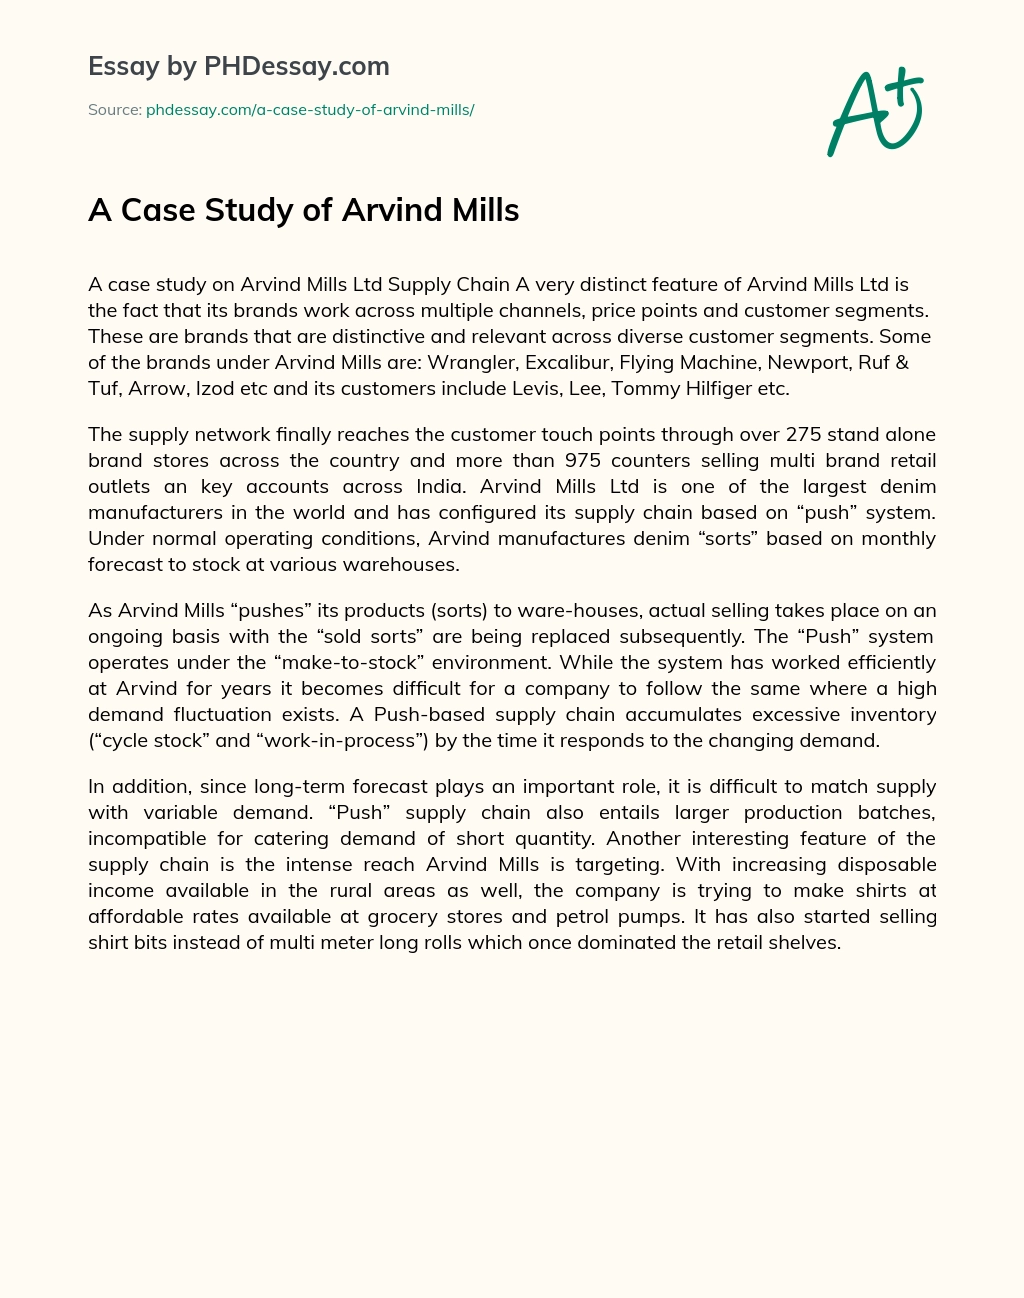 A Case Study of Arvind Mills essay